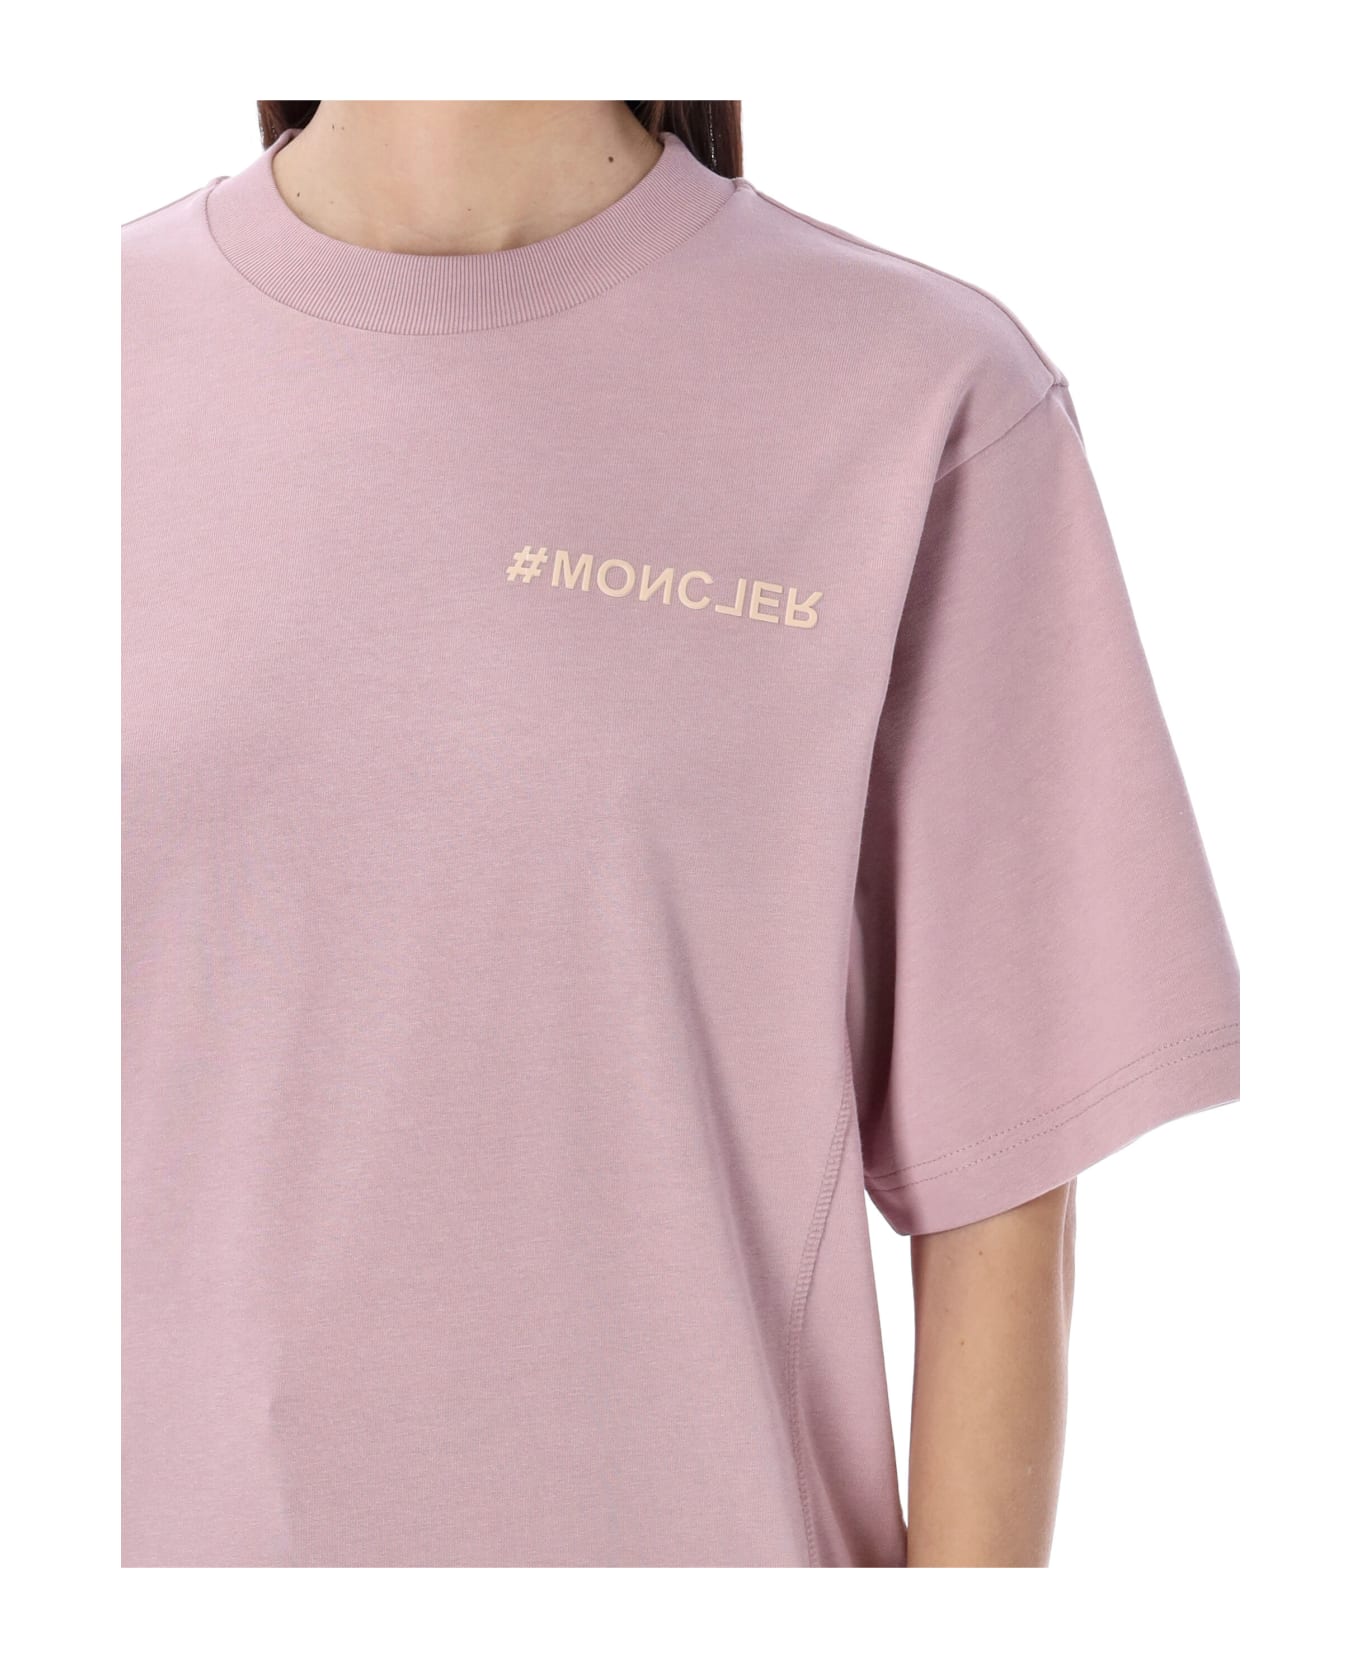 Moncler Grenoble T-shirt Tmm - PINK